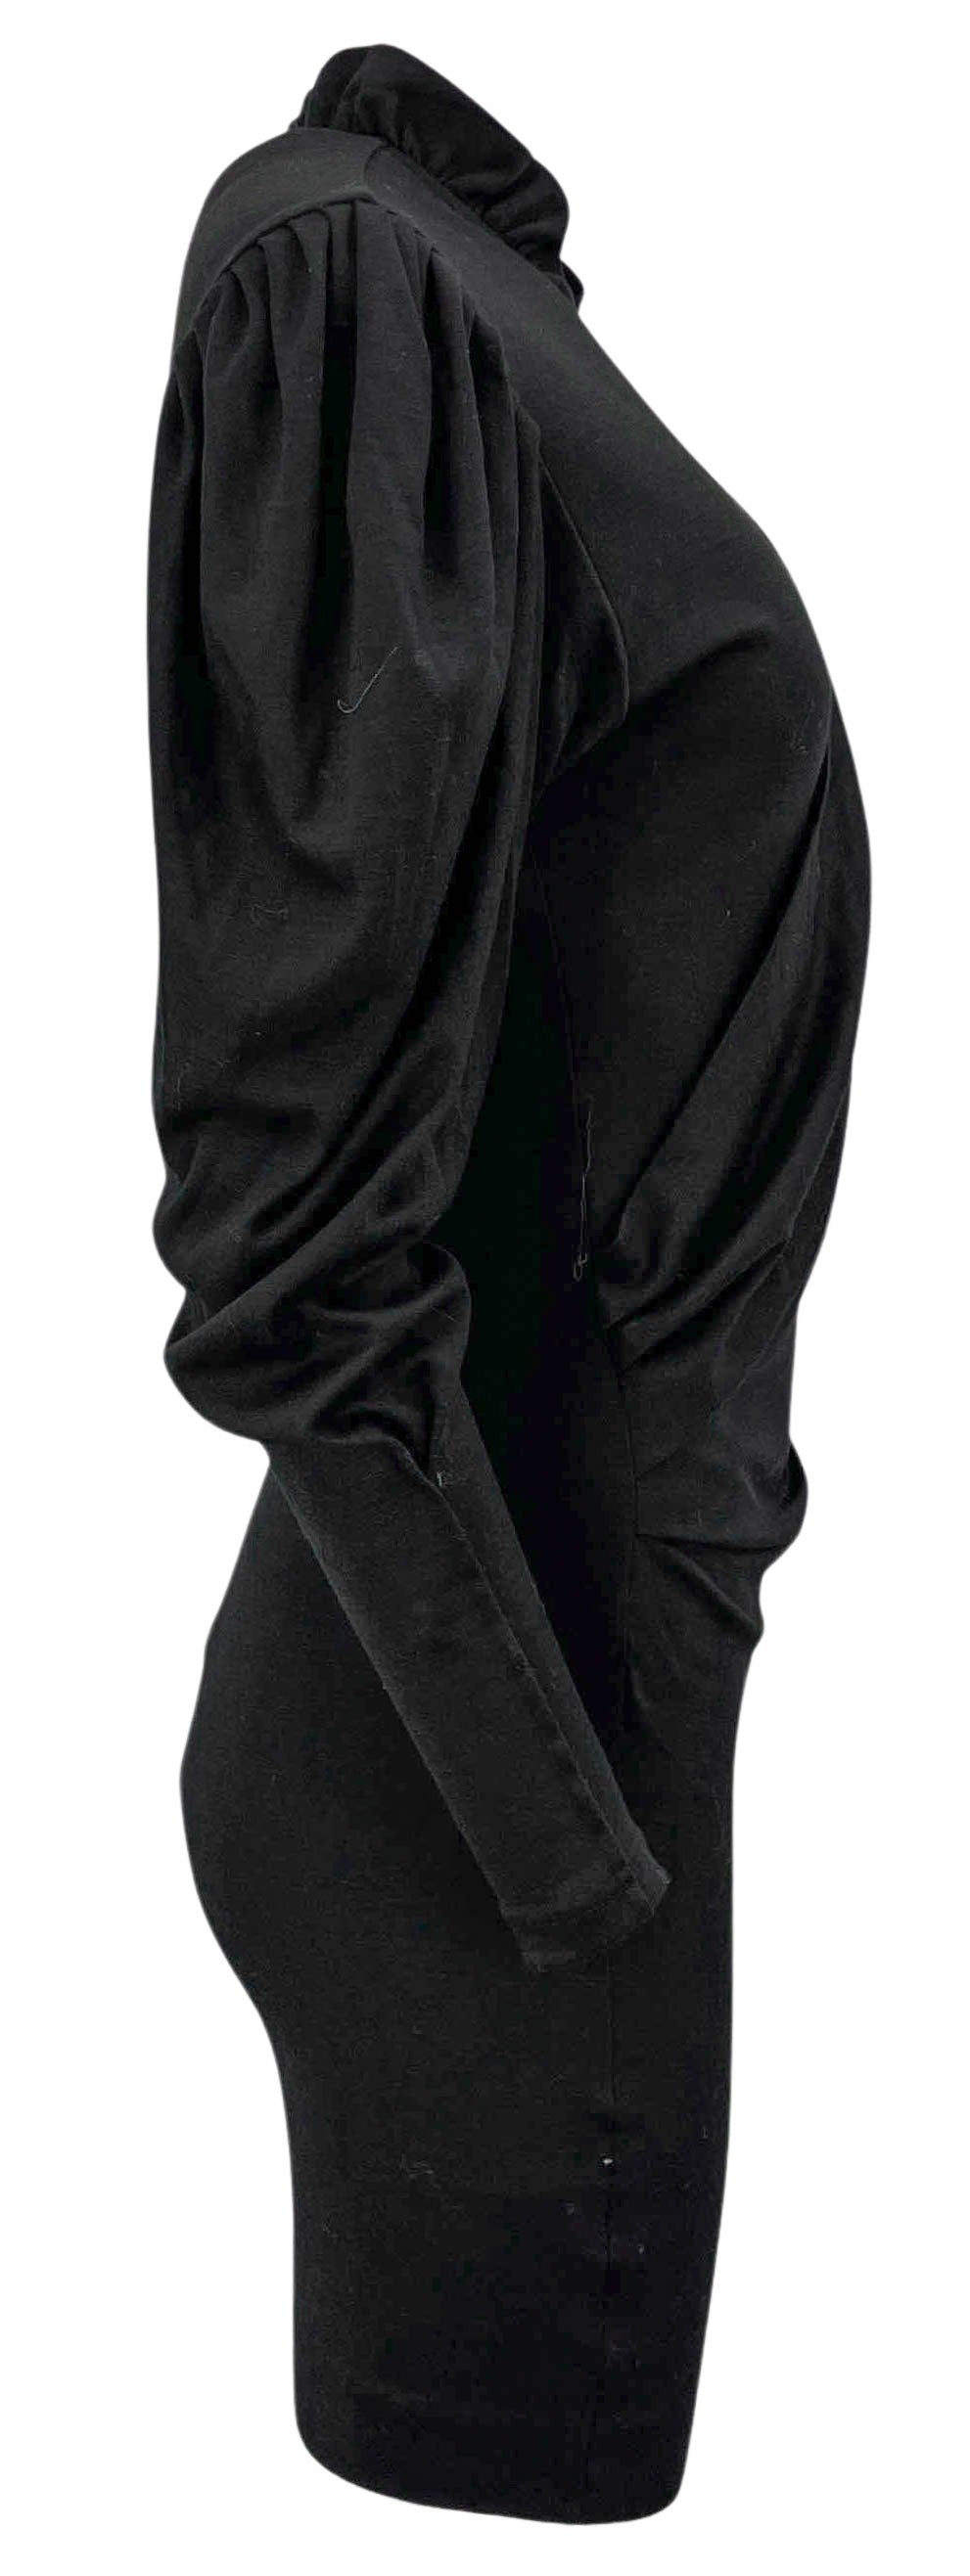 Isabel Marant Divya Dress in Black - Discounts on Isabel Marant at UAL